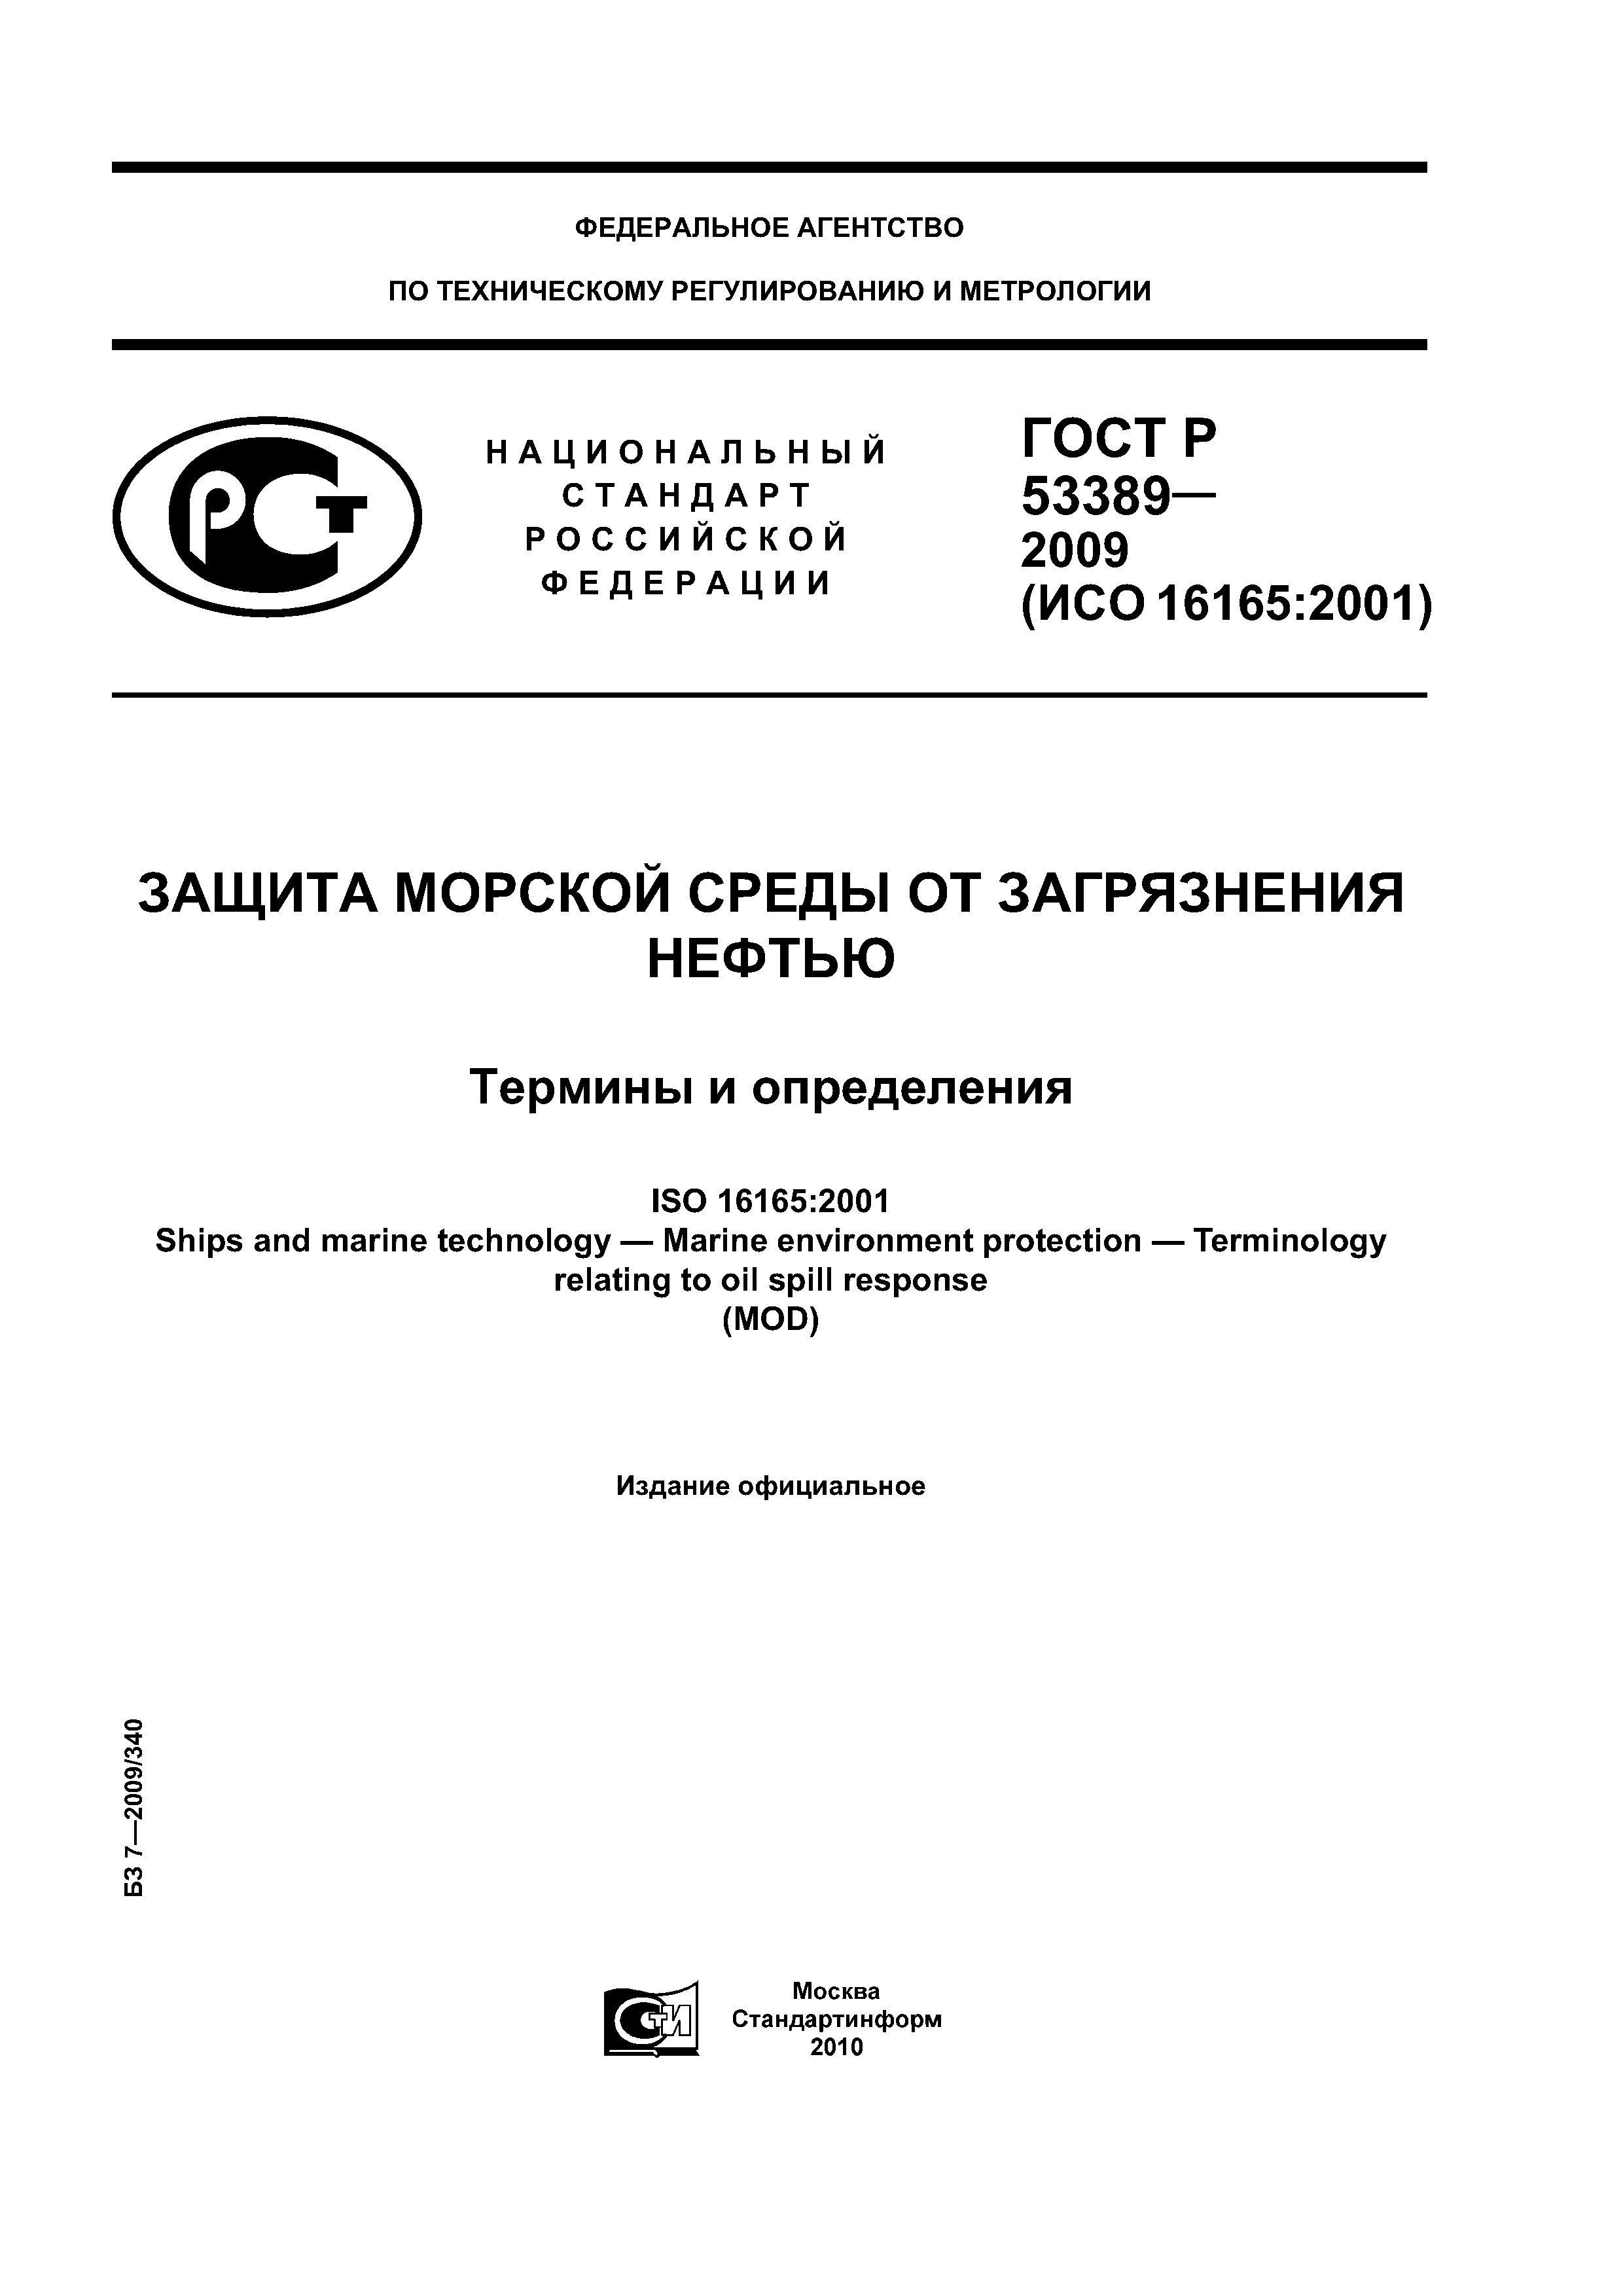 ГОСТ Р 53389-2009